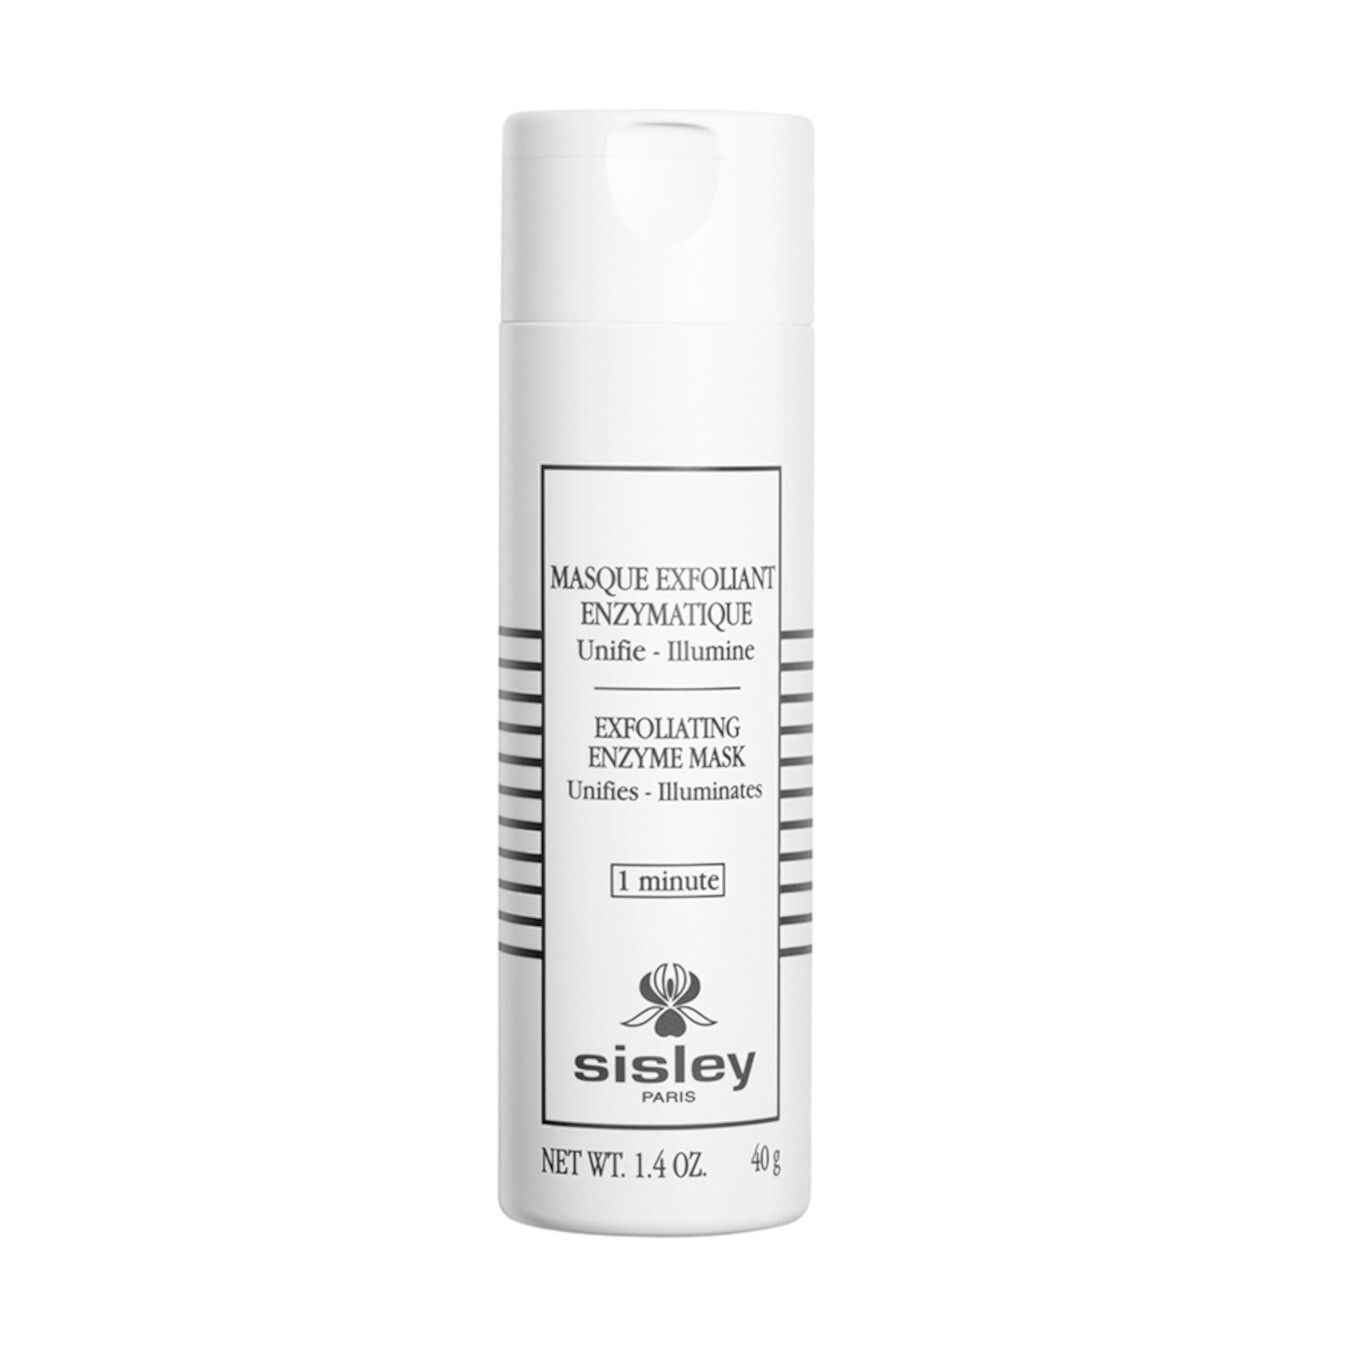 Sisley Masque Exfoliant Enzymatique Enzym-Peeling Maske von Sisley